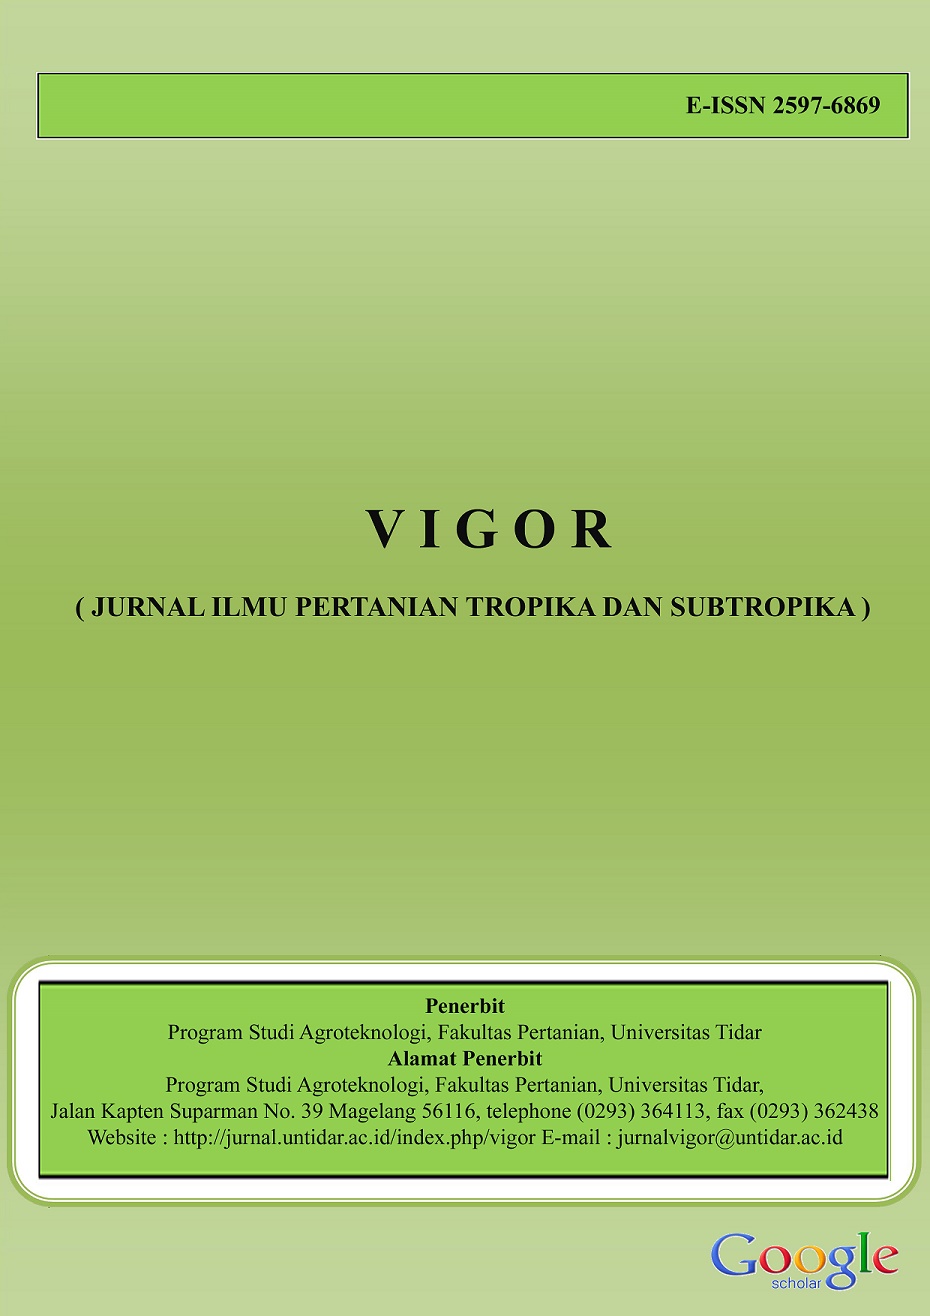 VIGOR: Jurnal Ilmu Pertanian Tropika dan Subtropika adalah jurnal yang menginformasikan hasil penelitian dan telaah pustaka dalam berbagai aspek lingkup pertanian dan komoditas pertanian antara lain bidang agronomi, agroekoteknologi, pemuliaan tanaman, ho